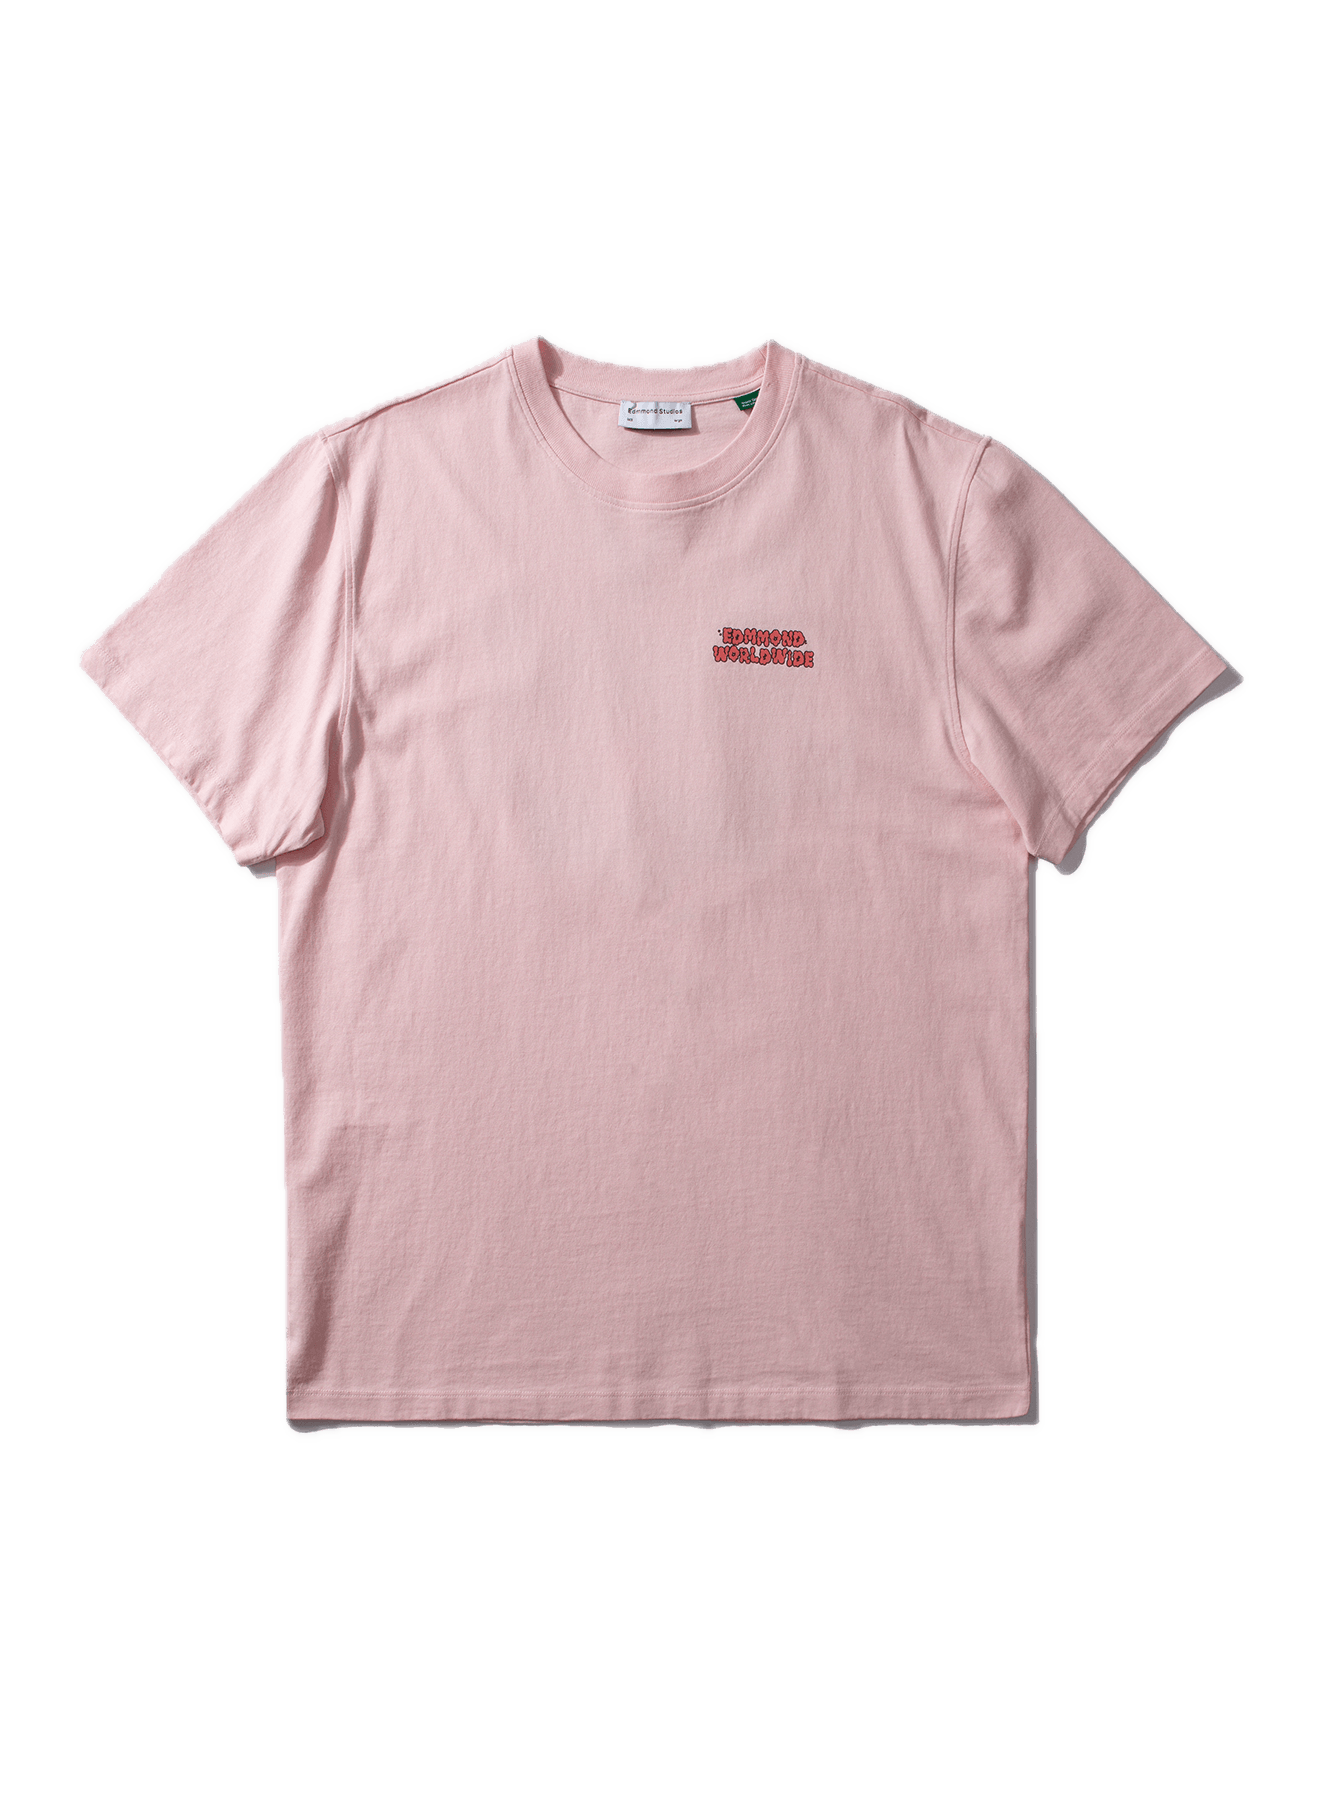 Camiseta Edmmond Studios Yaggo Pink - ECRU